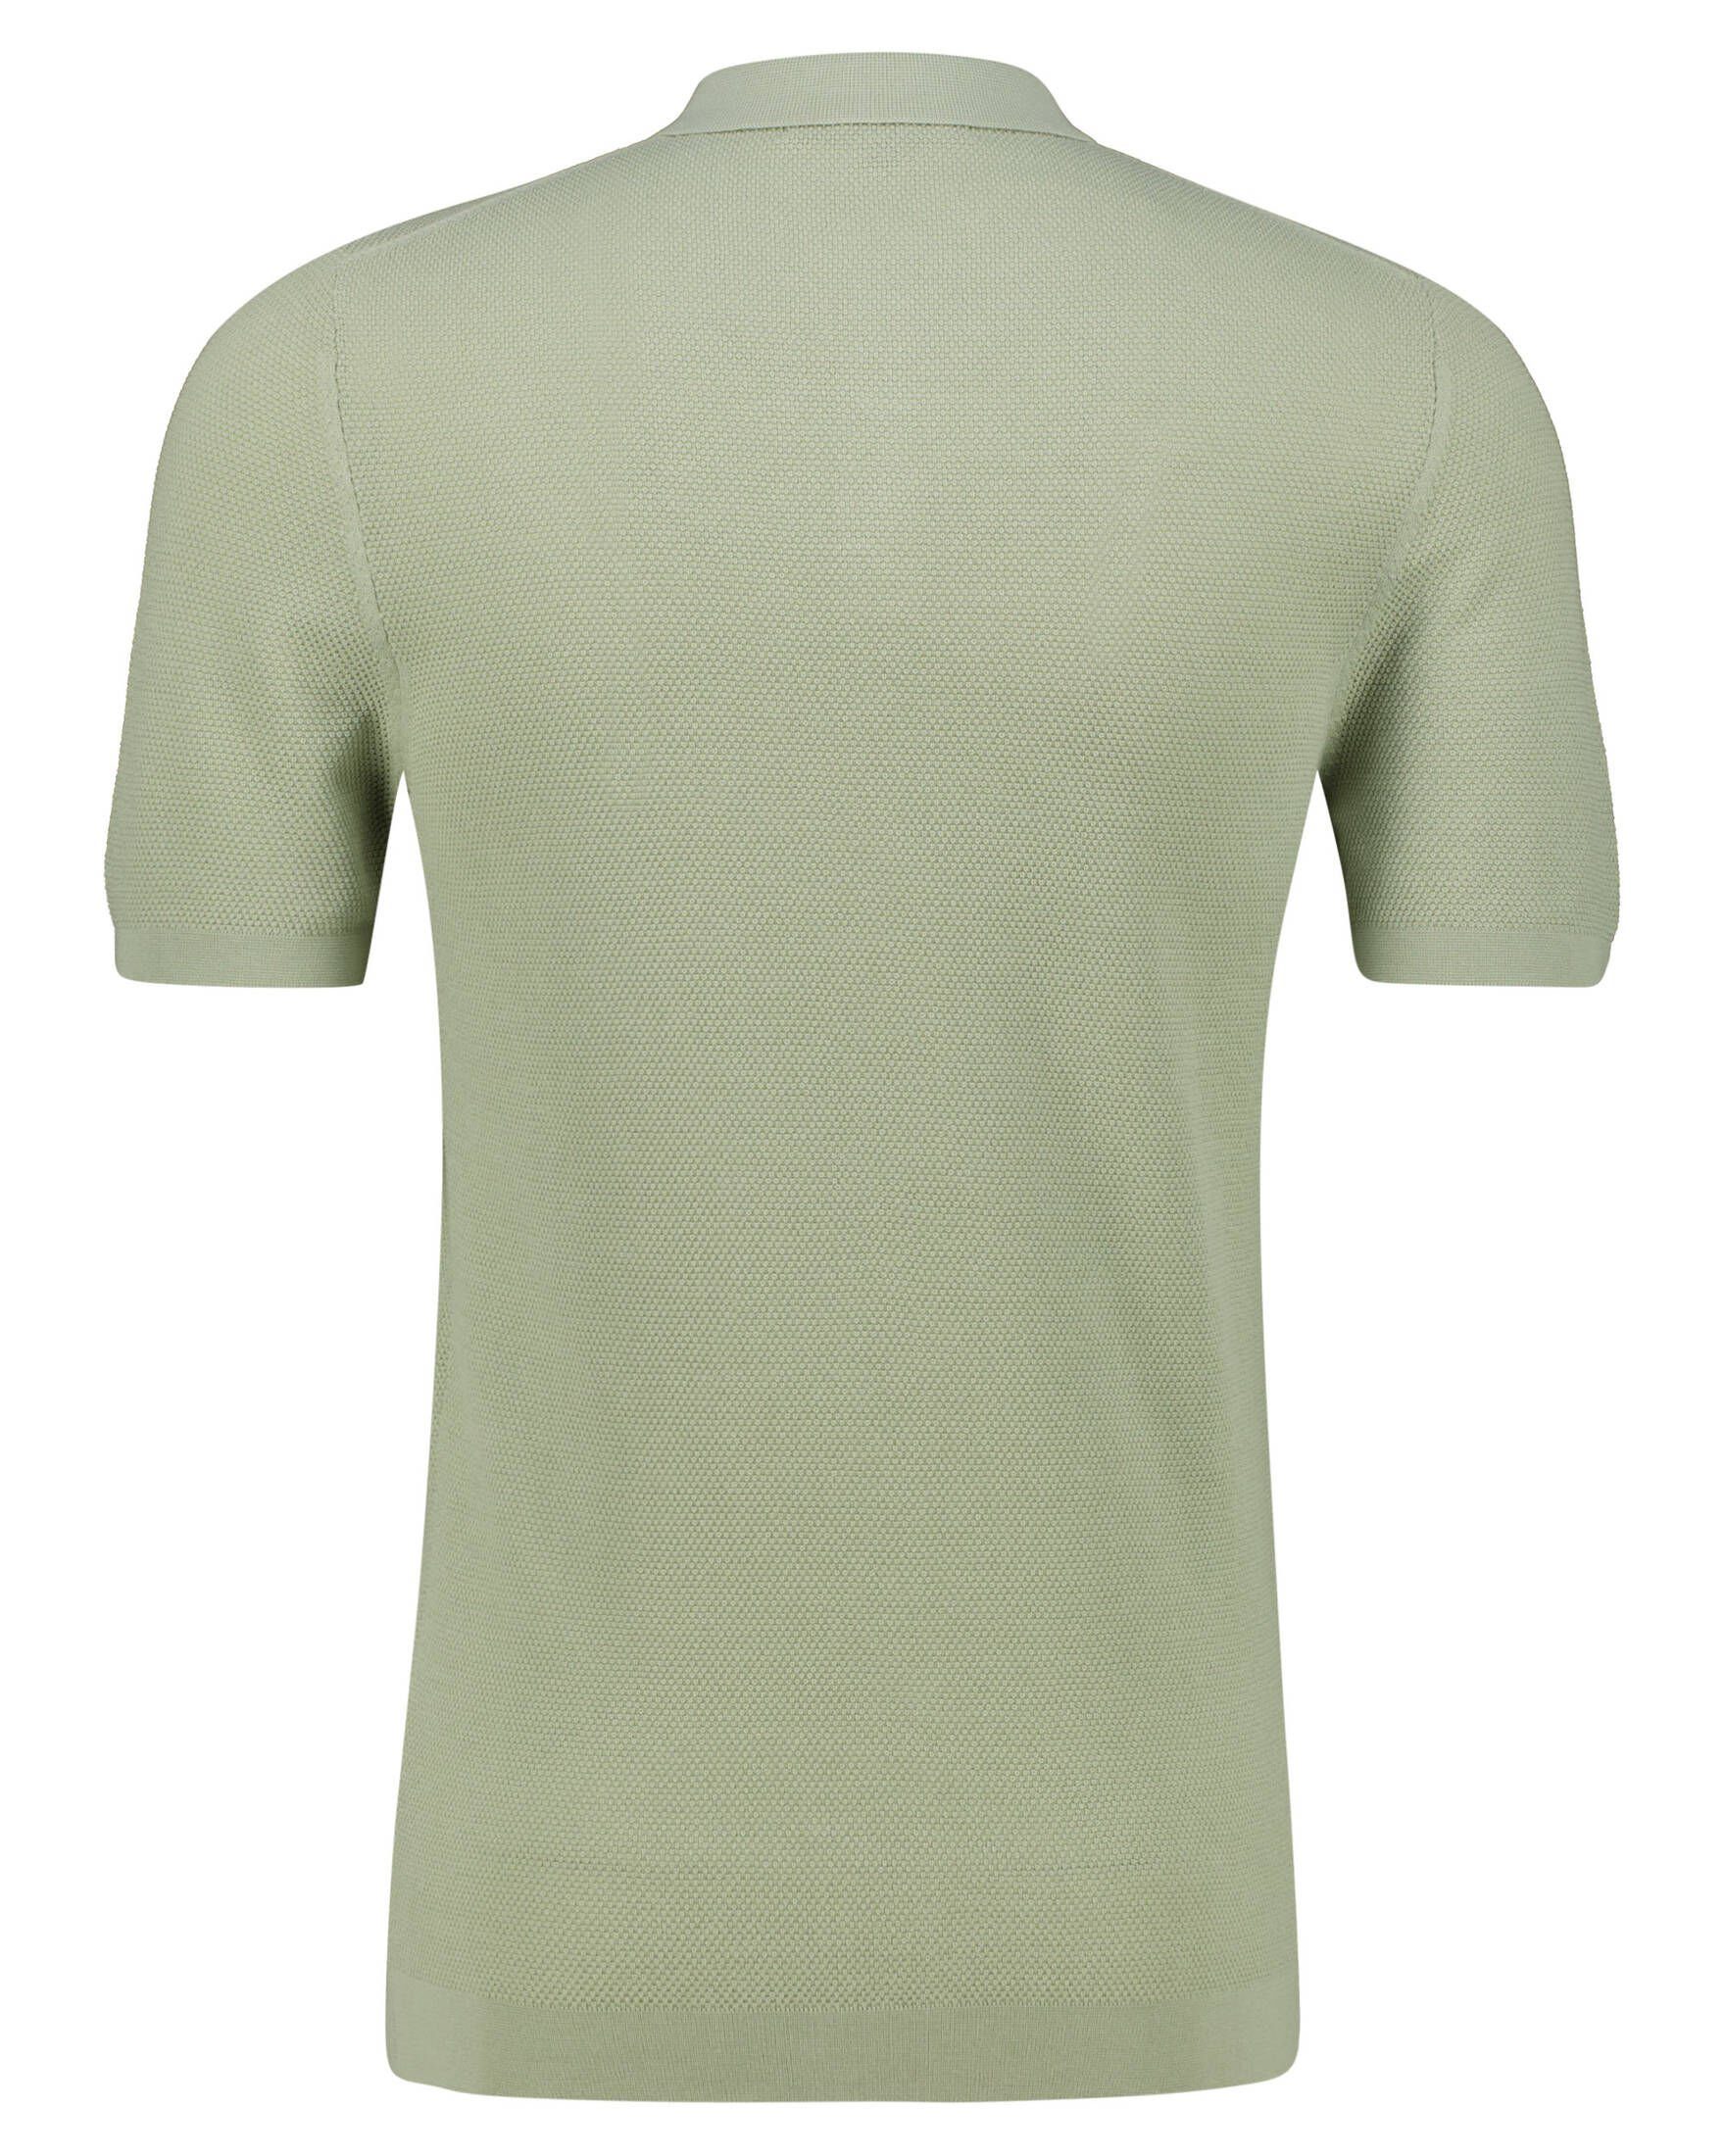 "Triton" grün Poloshirt (43) Herren Poloshirt Kurzarm (1-tlg) Drykorn